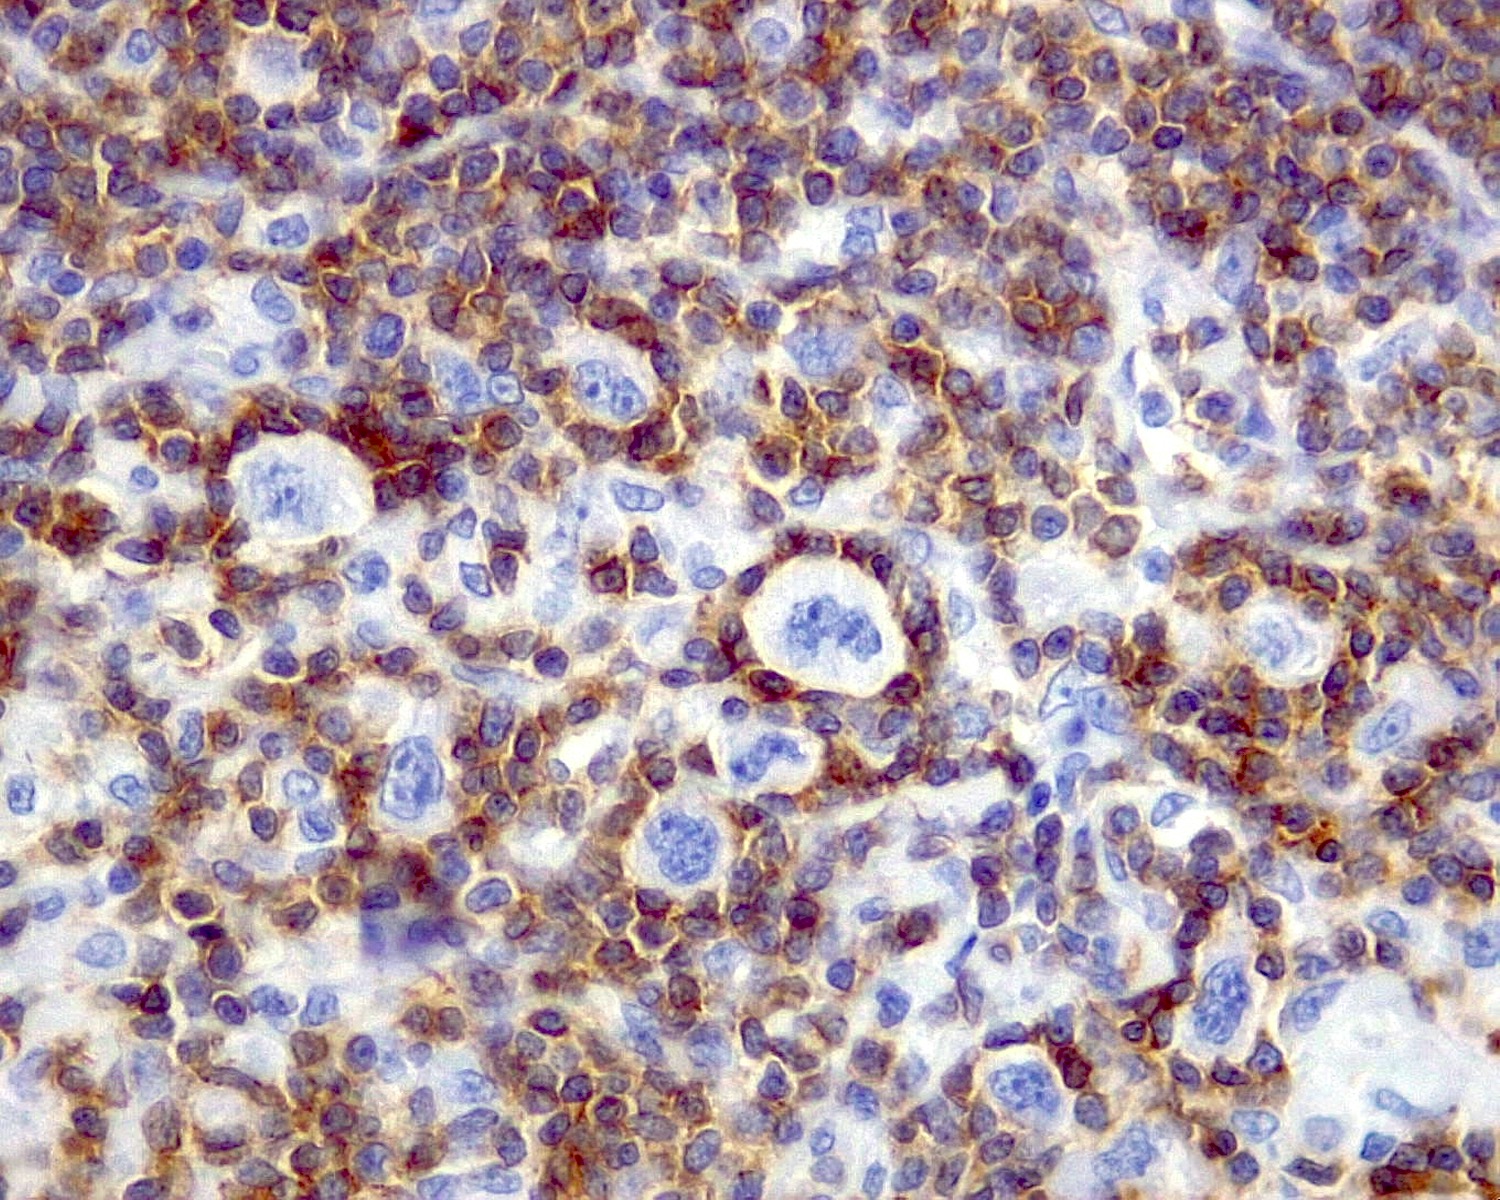 Rosetting CD3+ lymphocytes